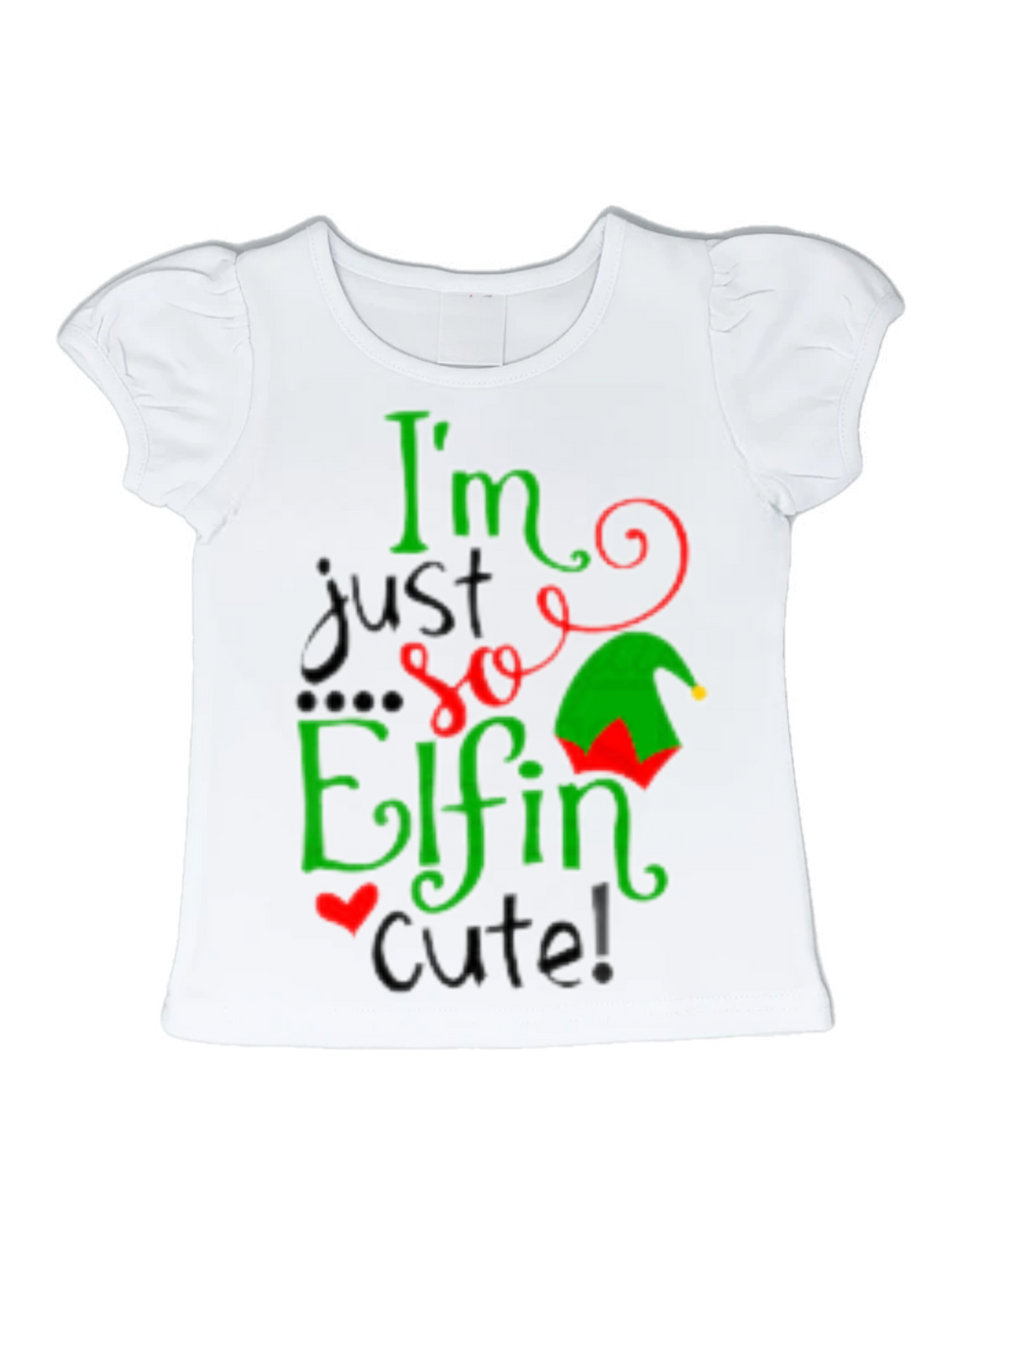 I’m so Elfin cute bottoms🎄🎄🎄